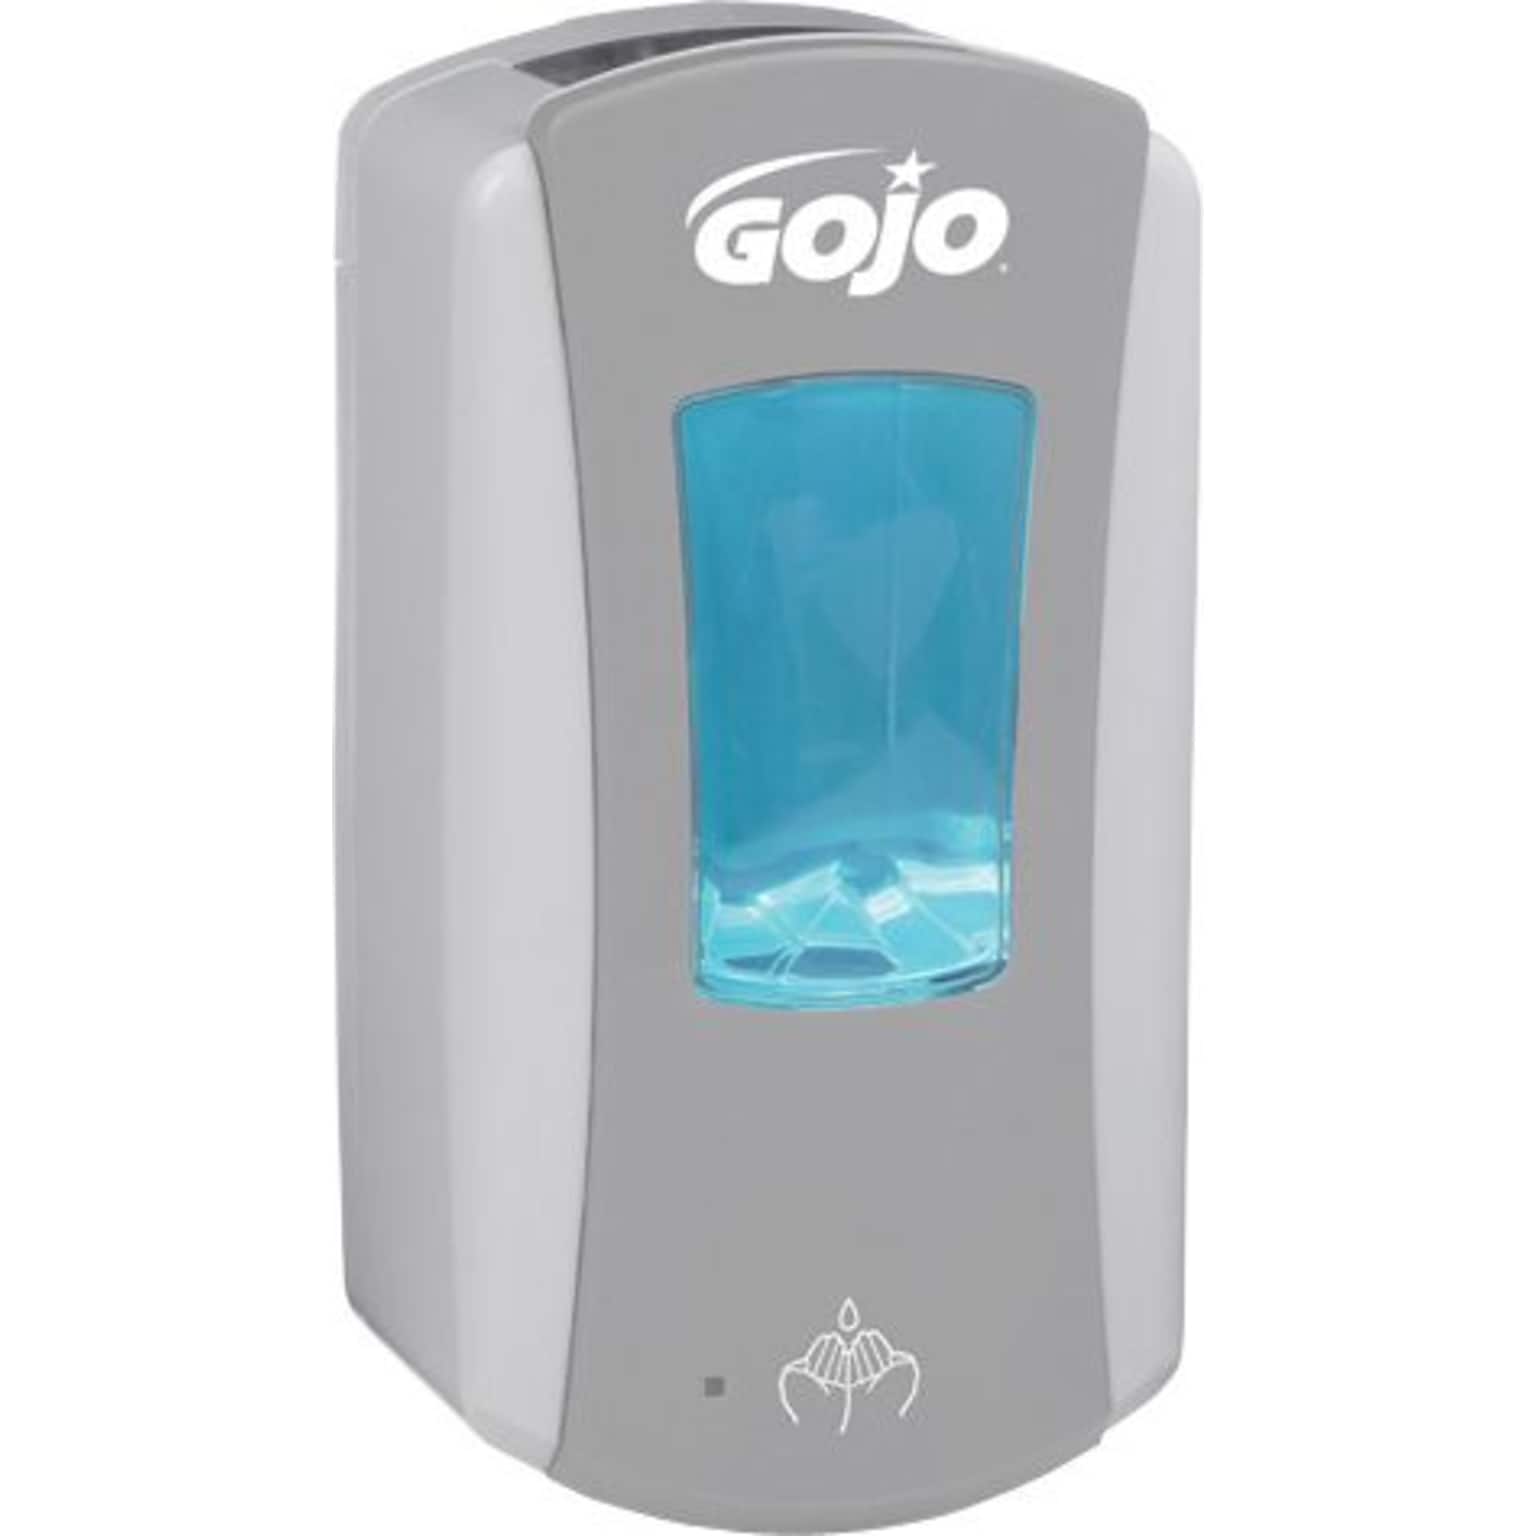 GOJO LTX 12 Automatic Wall Mounted Hand Soap Dispenser, Gray/Silver (1984-04)